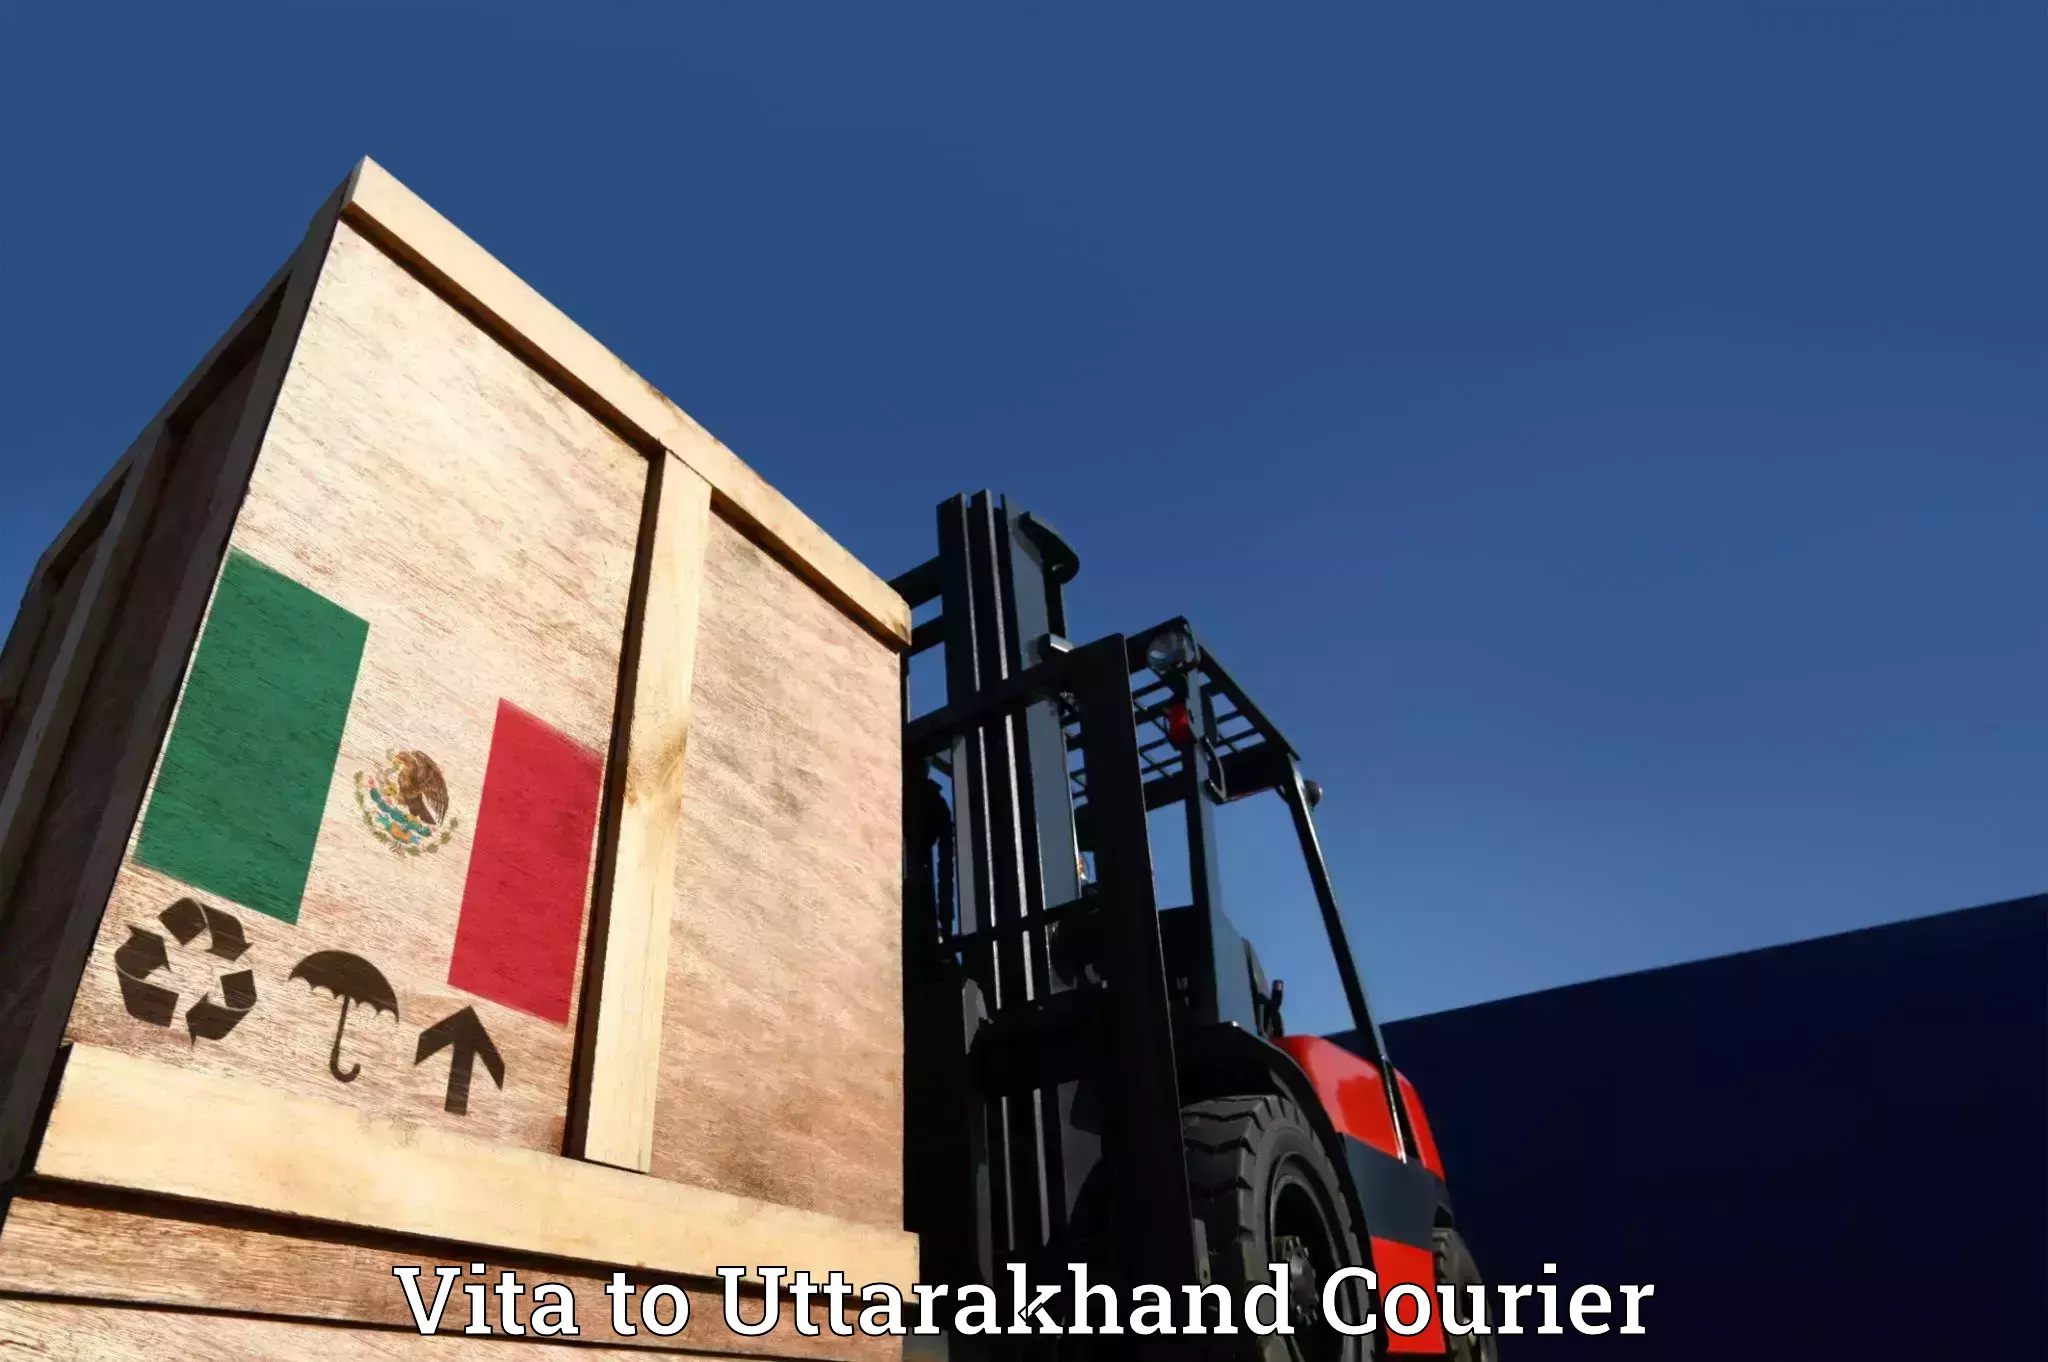 Specialized moving company Vita to Bhagwanpur